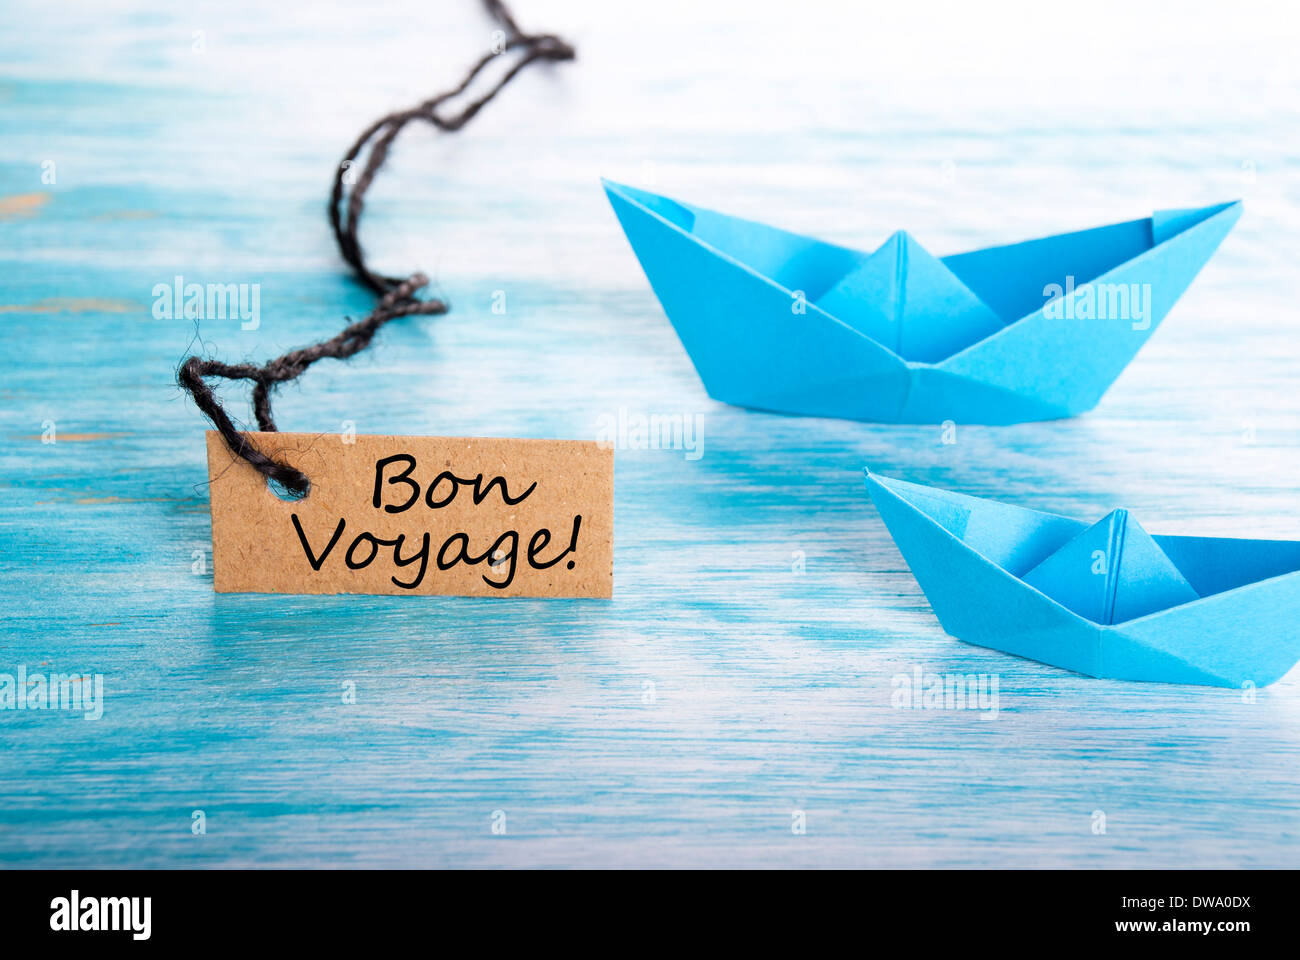 bon voyage voice meaning